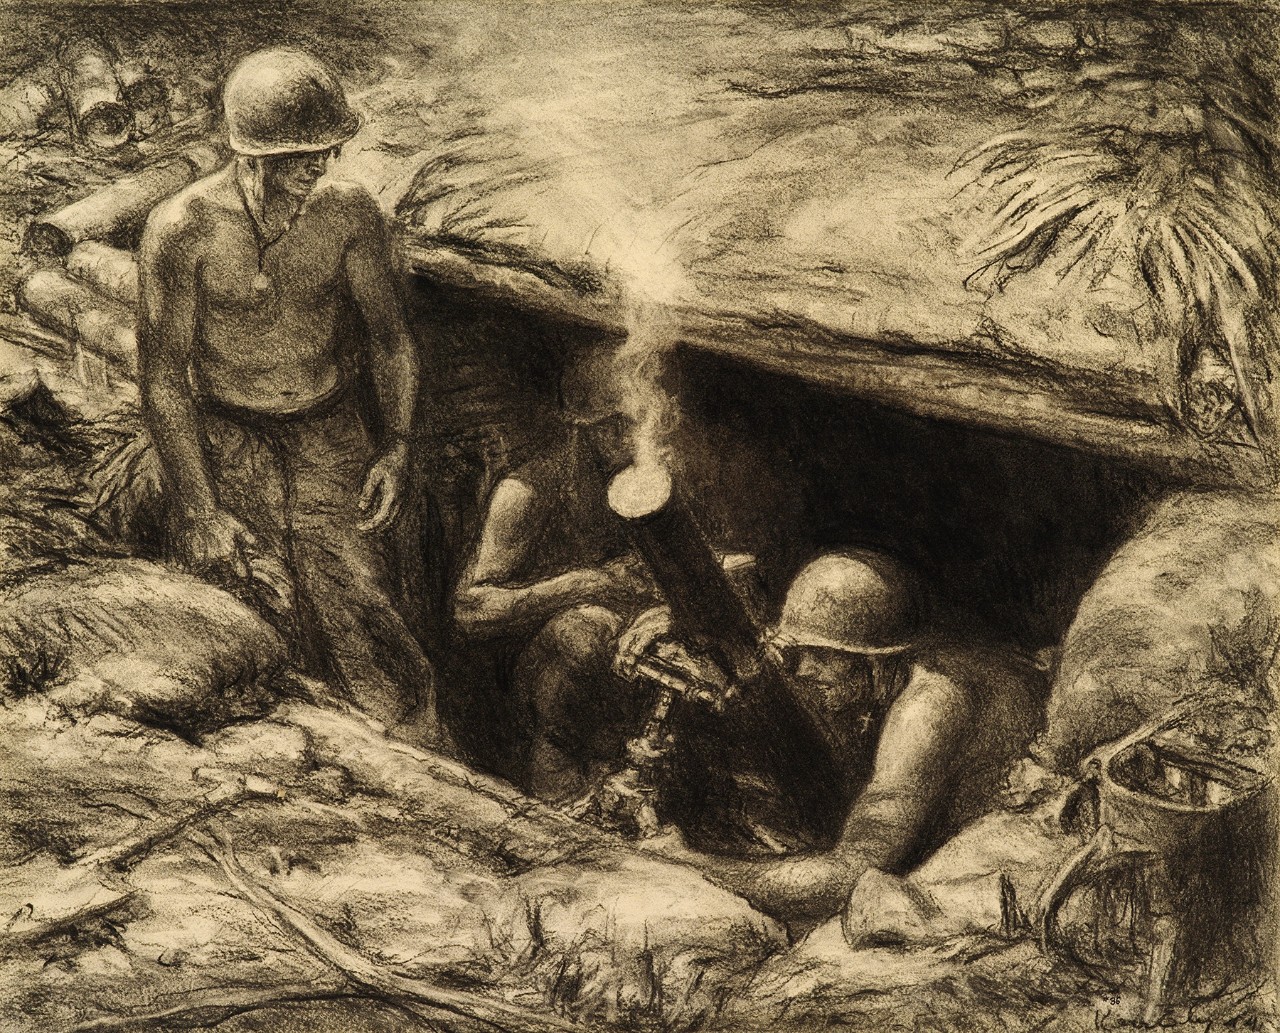 A Marine gun crew prepares to load a mortar